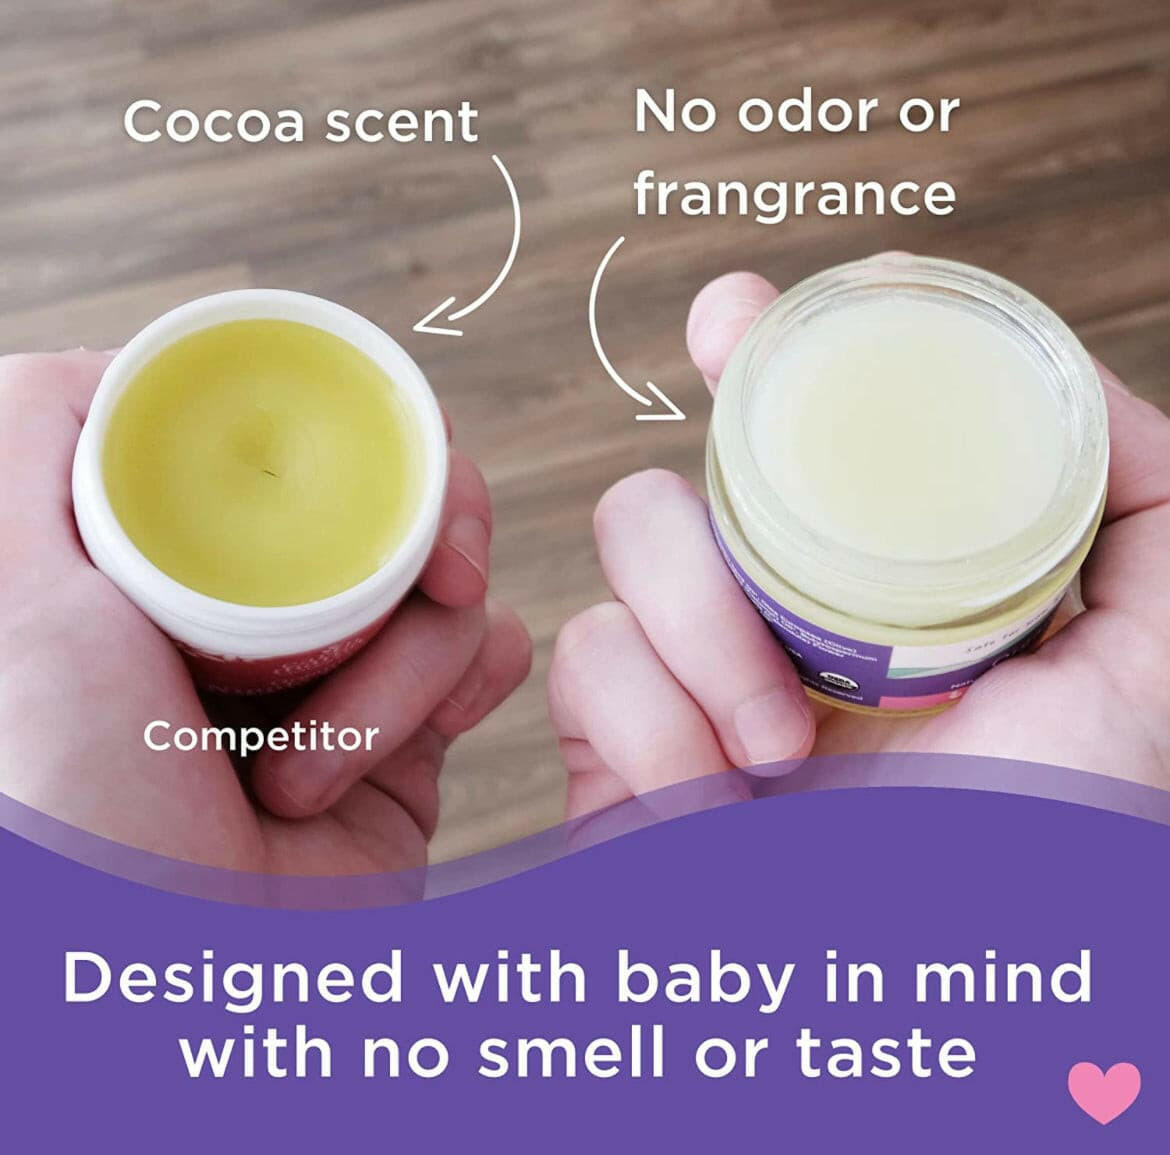 Lansinoh Organic Nipple Cream for Breastfeeding 56g.